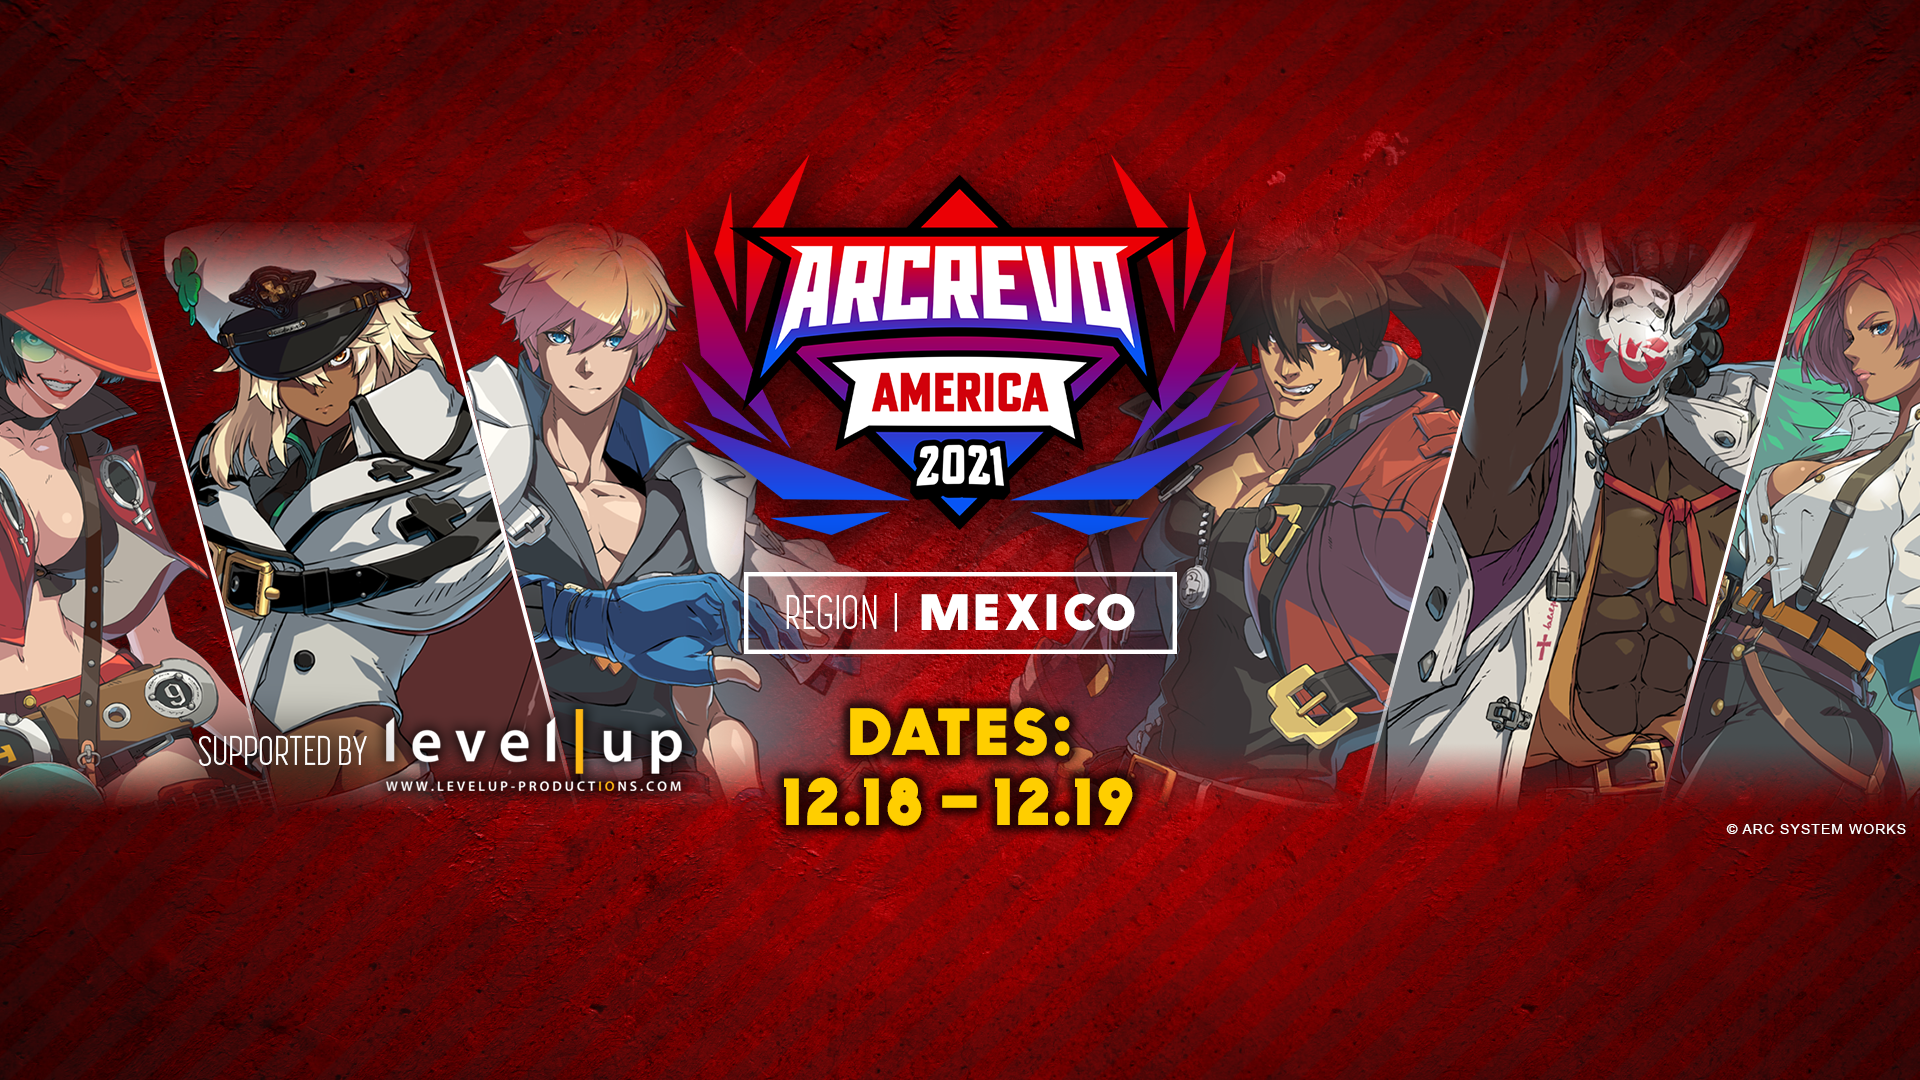 ARCREVO America 2021 – México